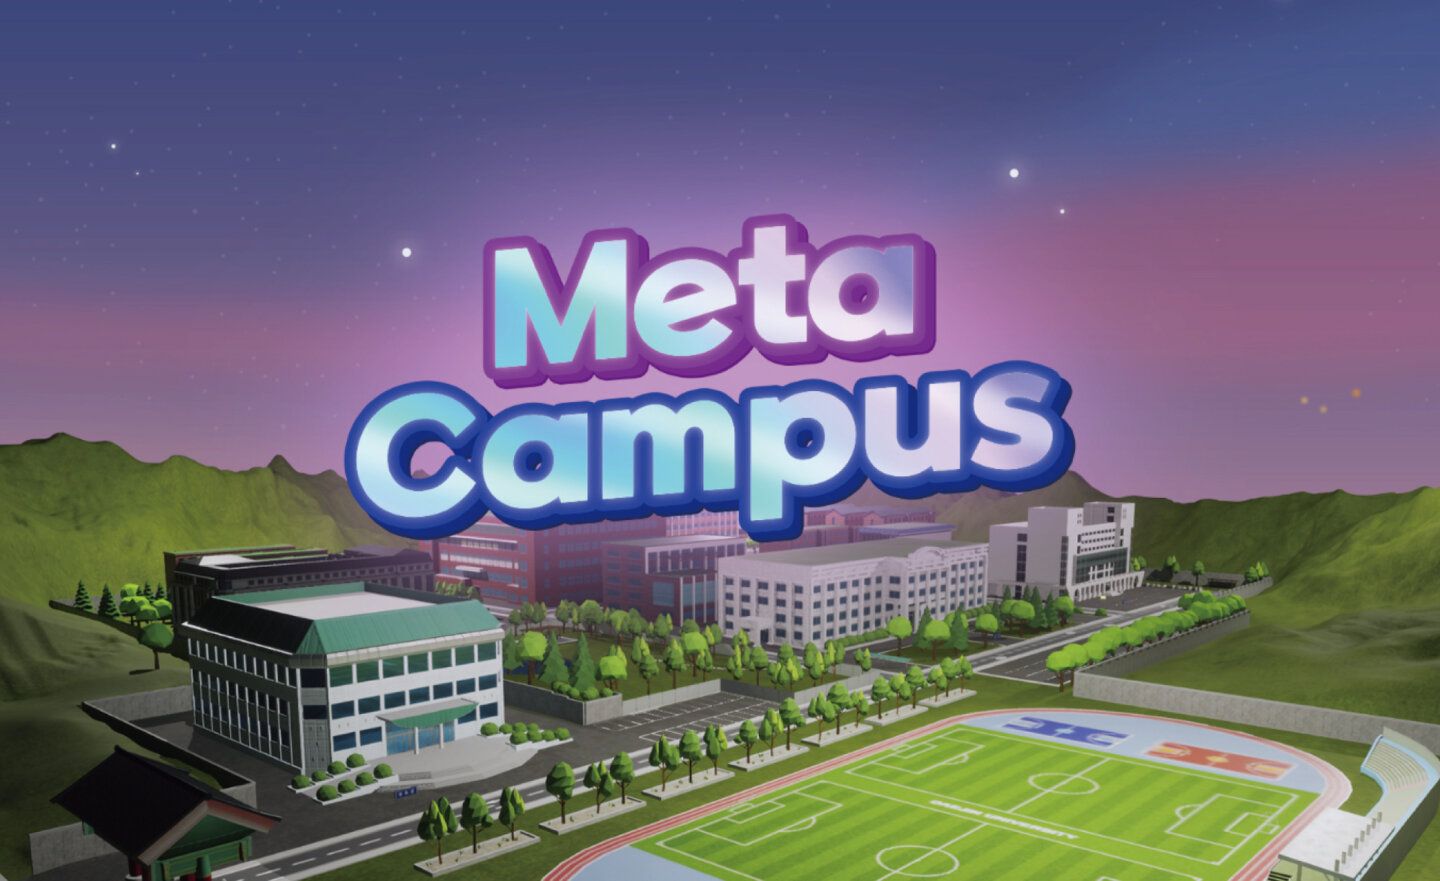 DAIN LEADERS 推出元宇宙學習體驗平台「Meta Campus」